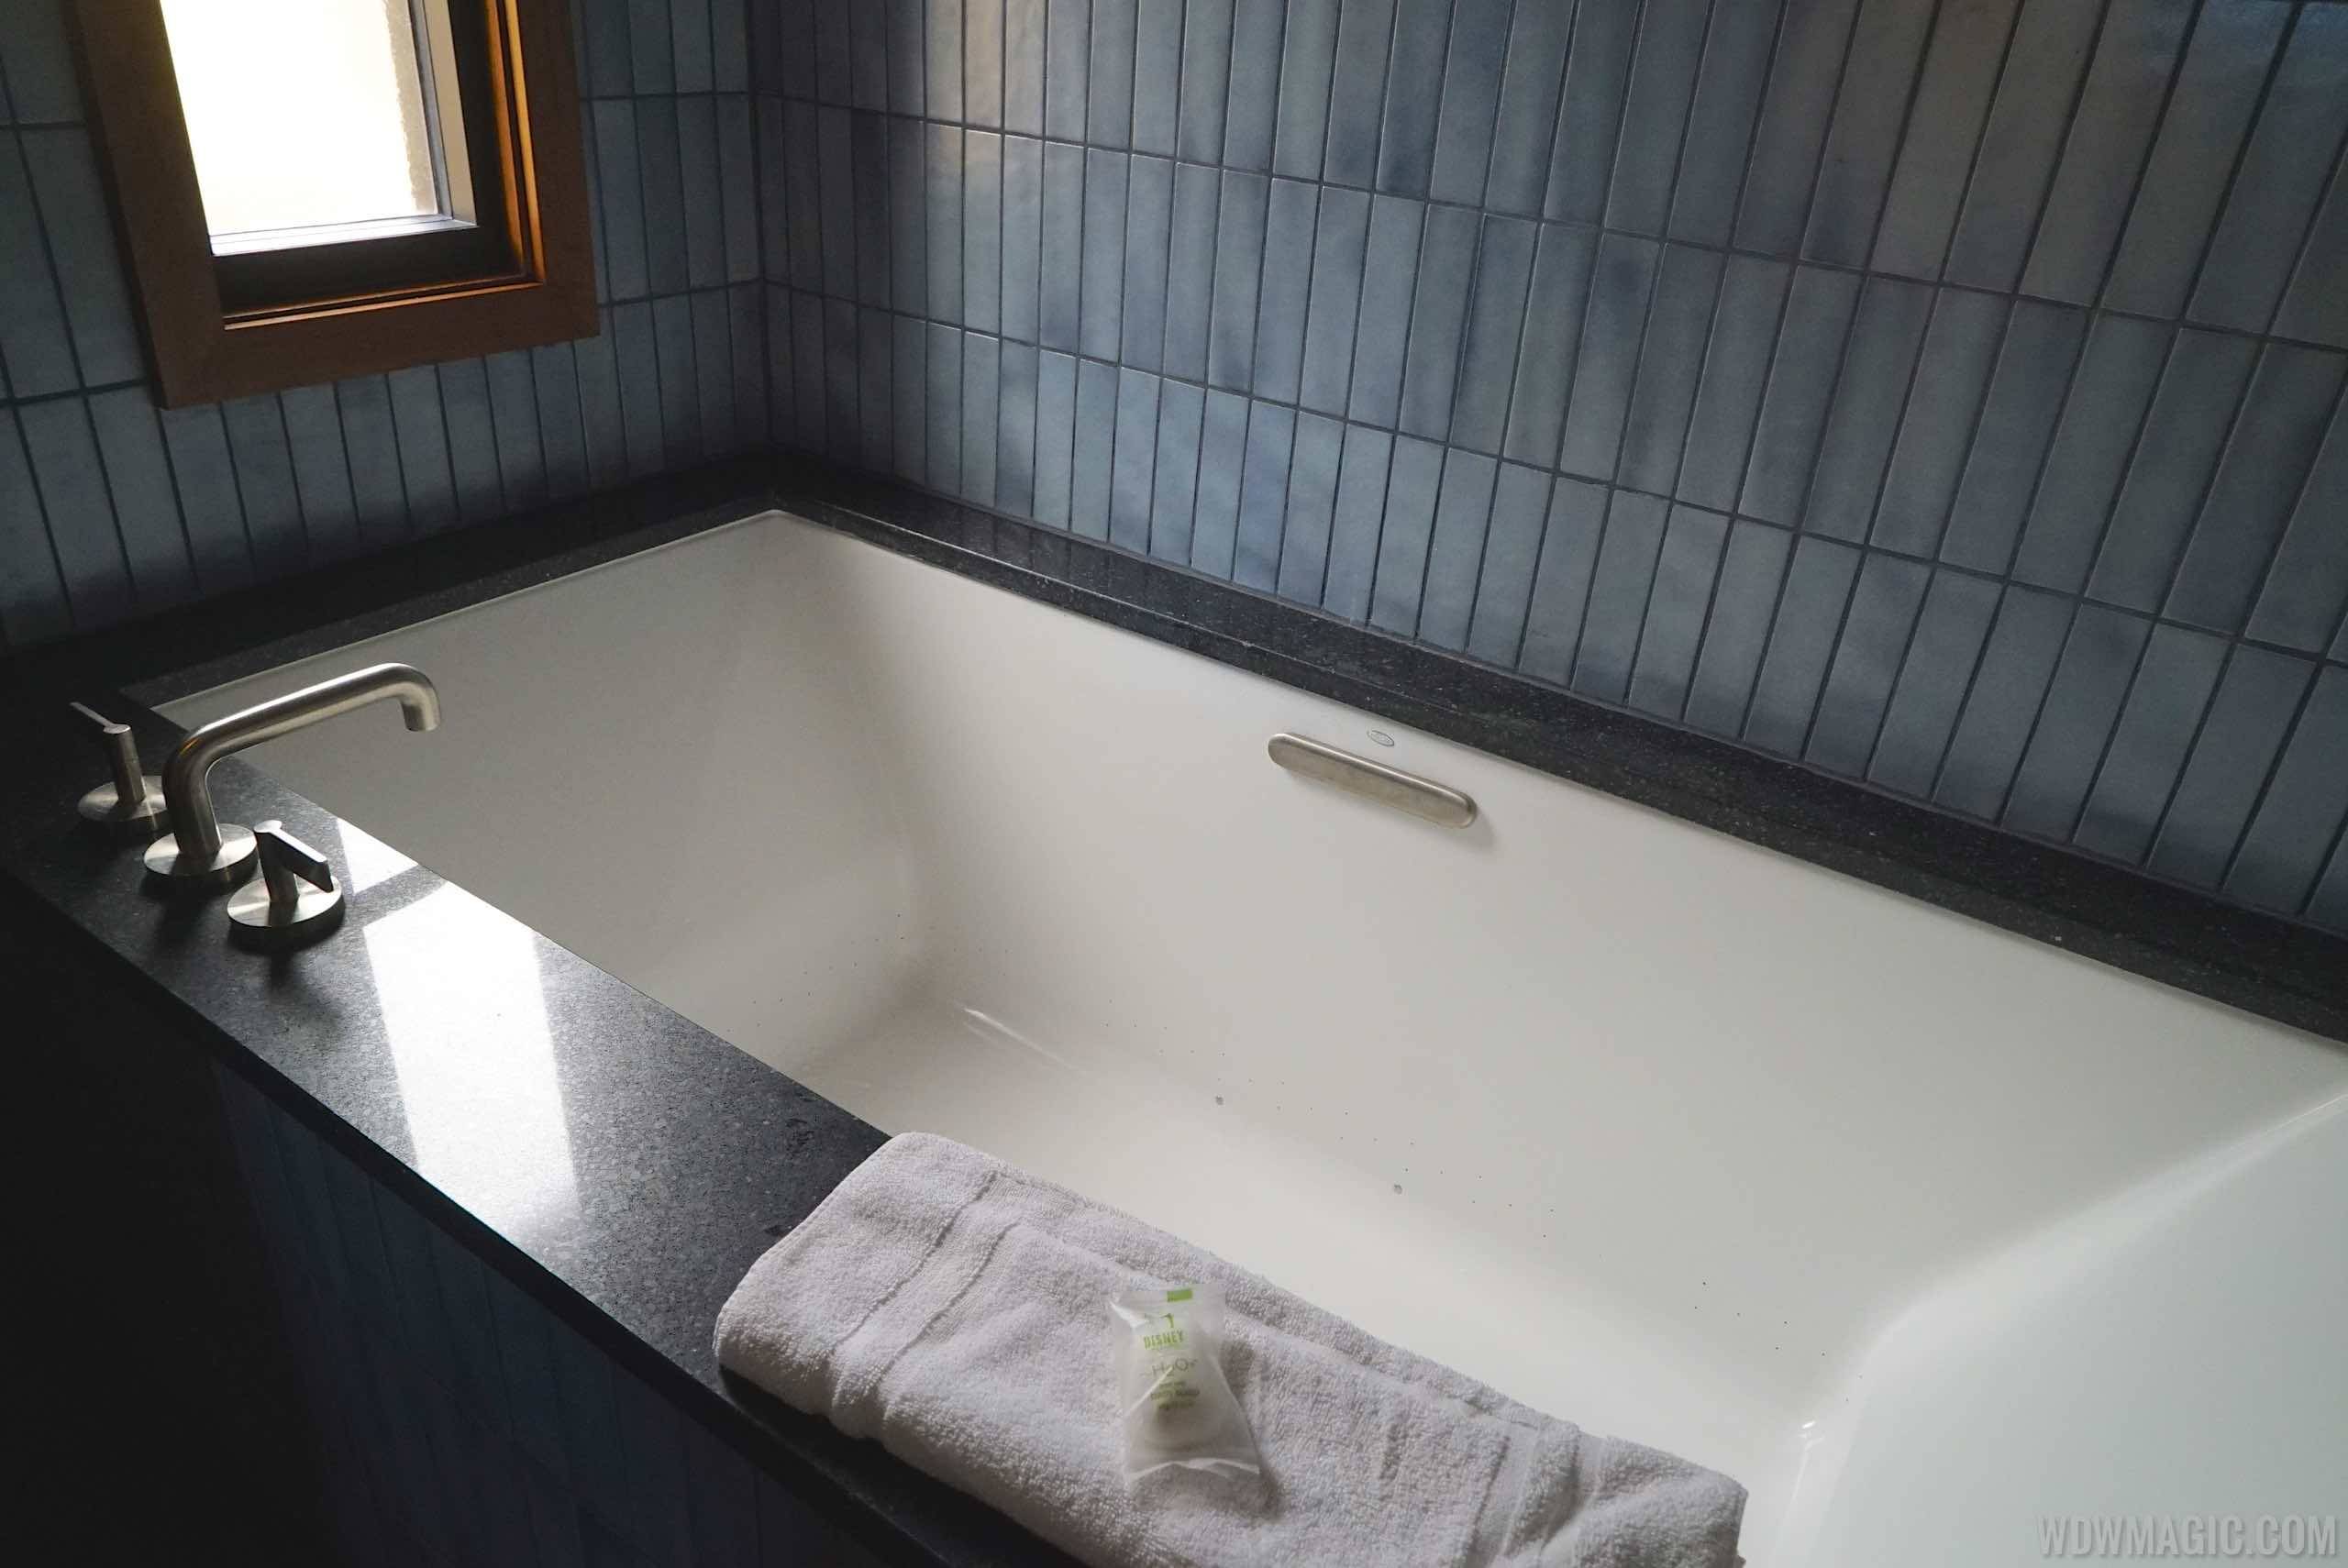 Disney's Polynesian Village Resort Bora Bora Bungalow - Master bathroom jetted bath tub